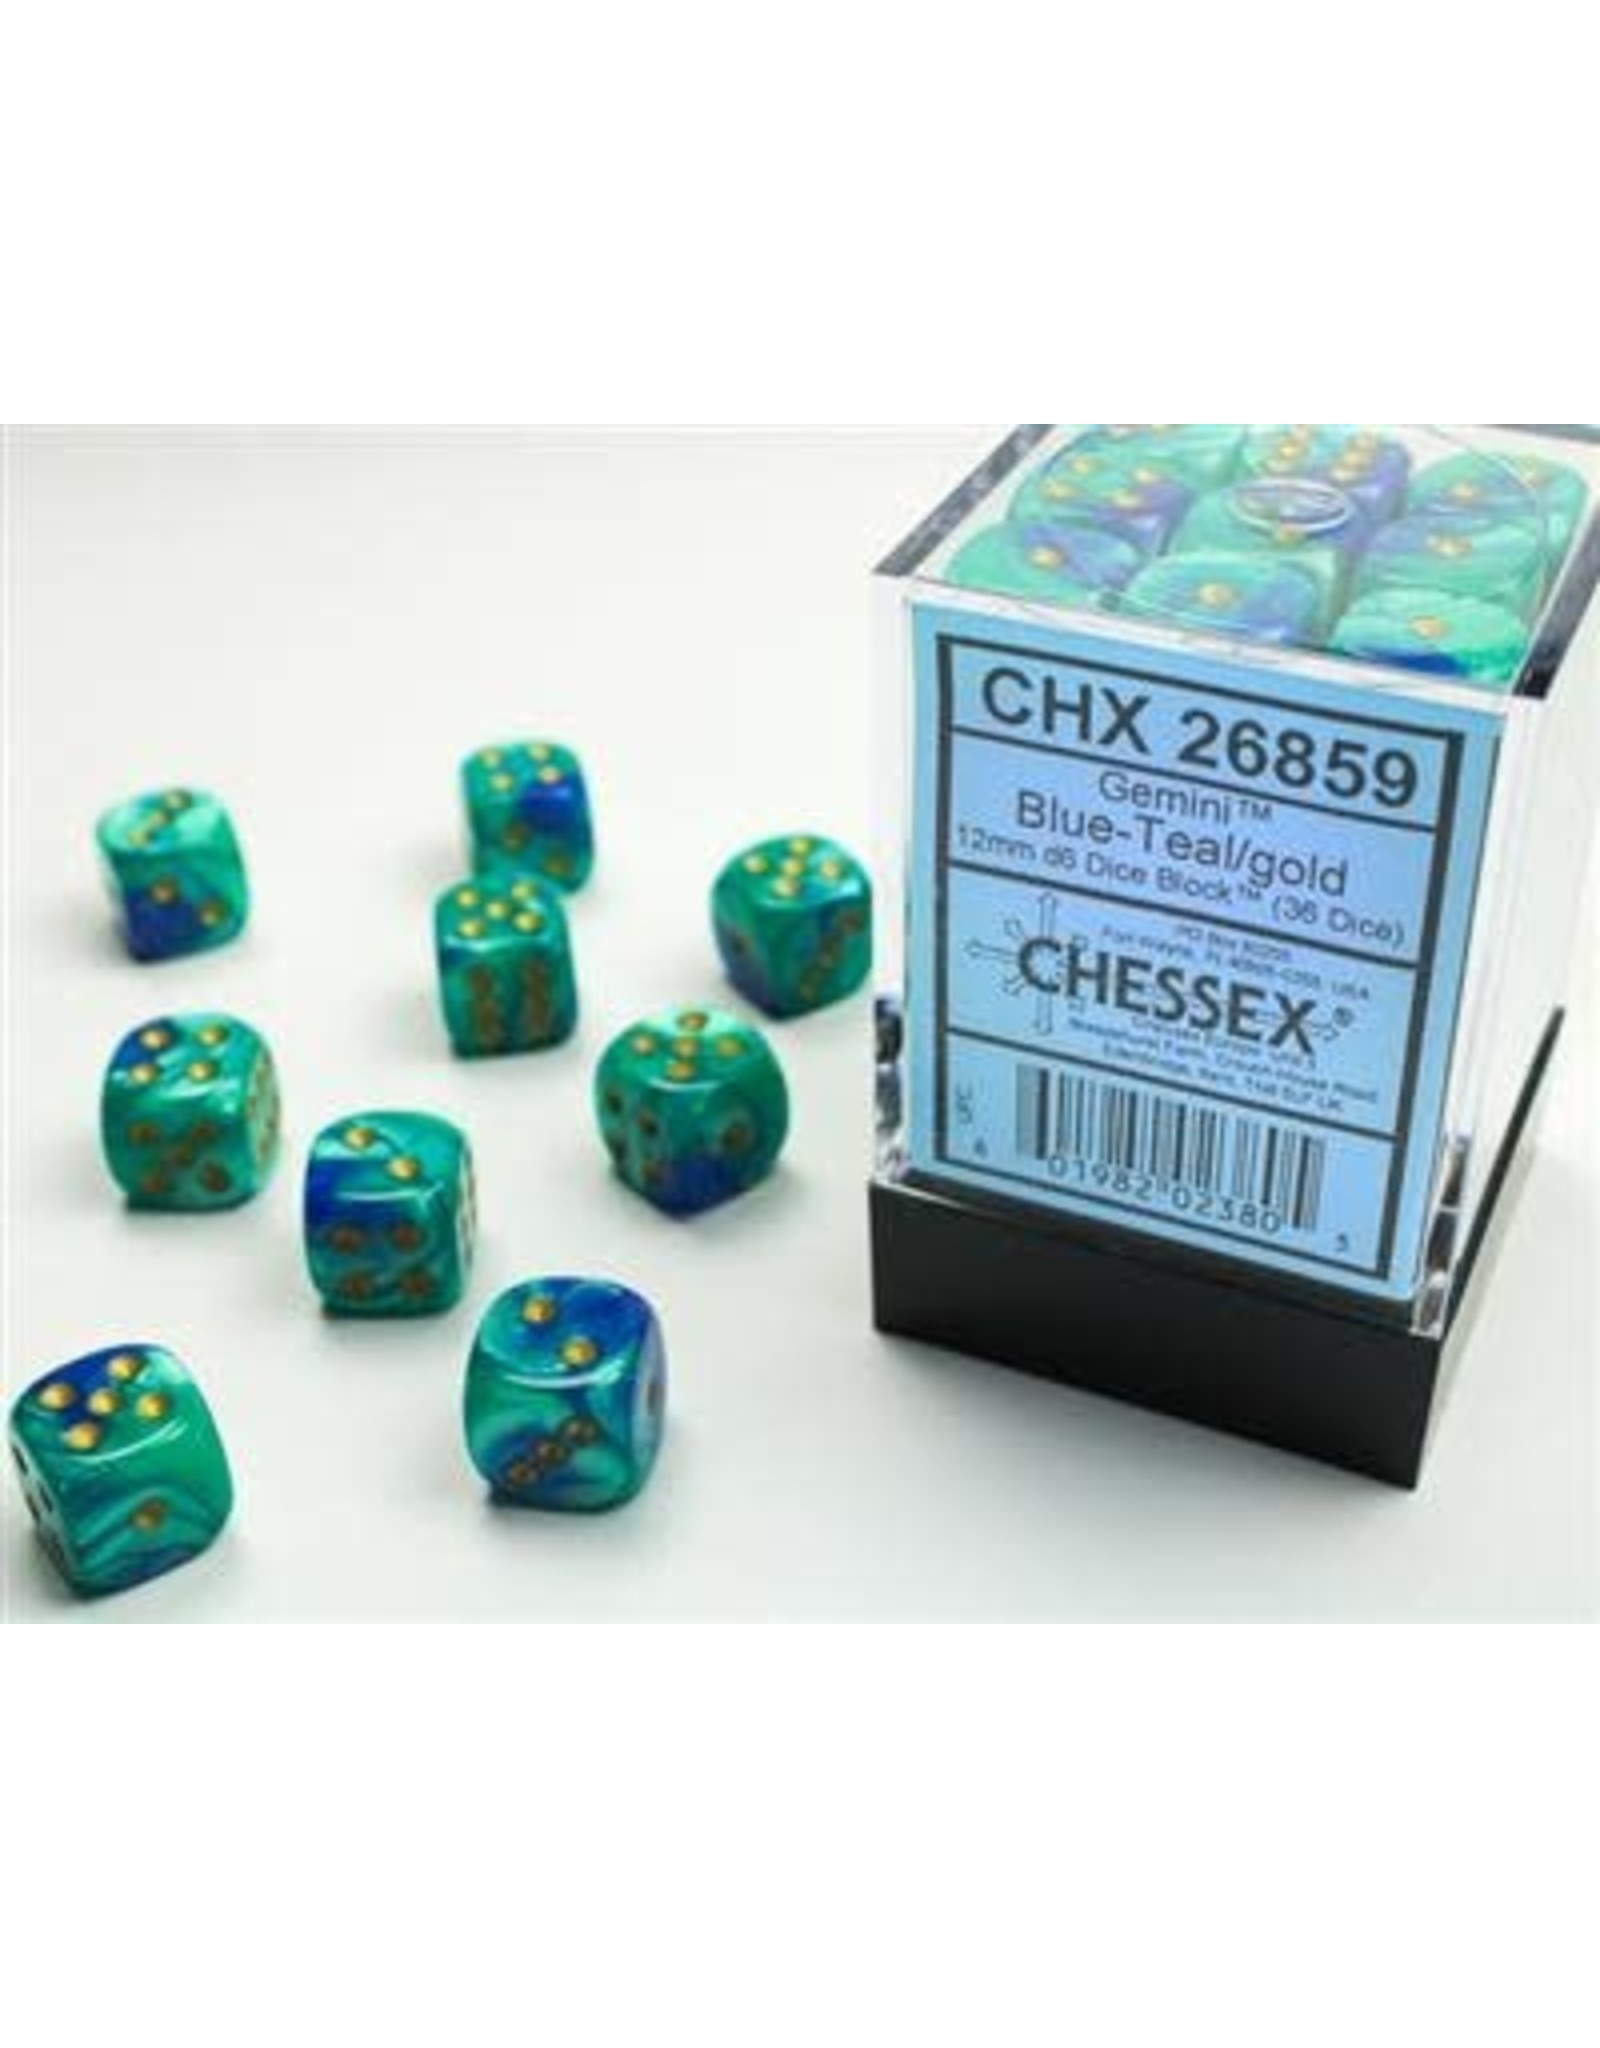 Chessex Gemini 12mm d6 Blue-Teal/gold Dice Block (36 dice)